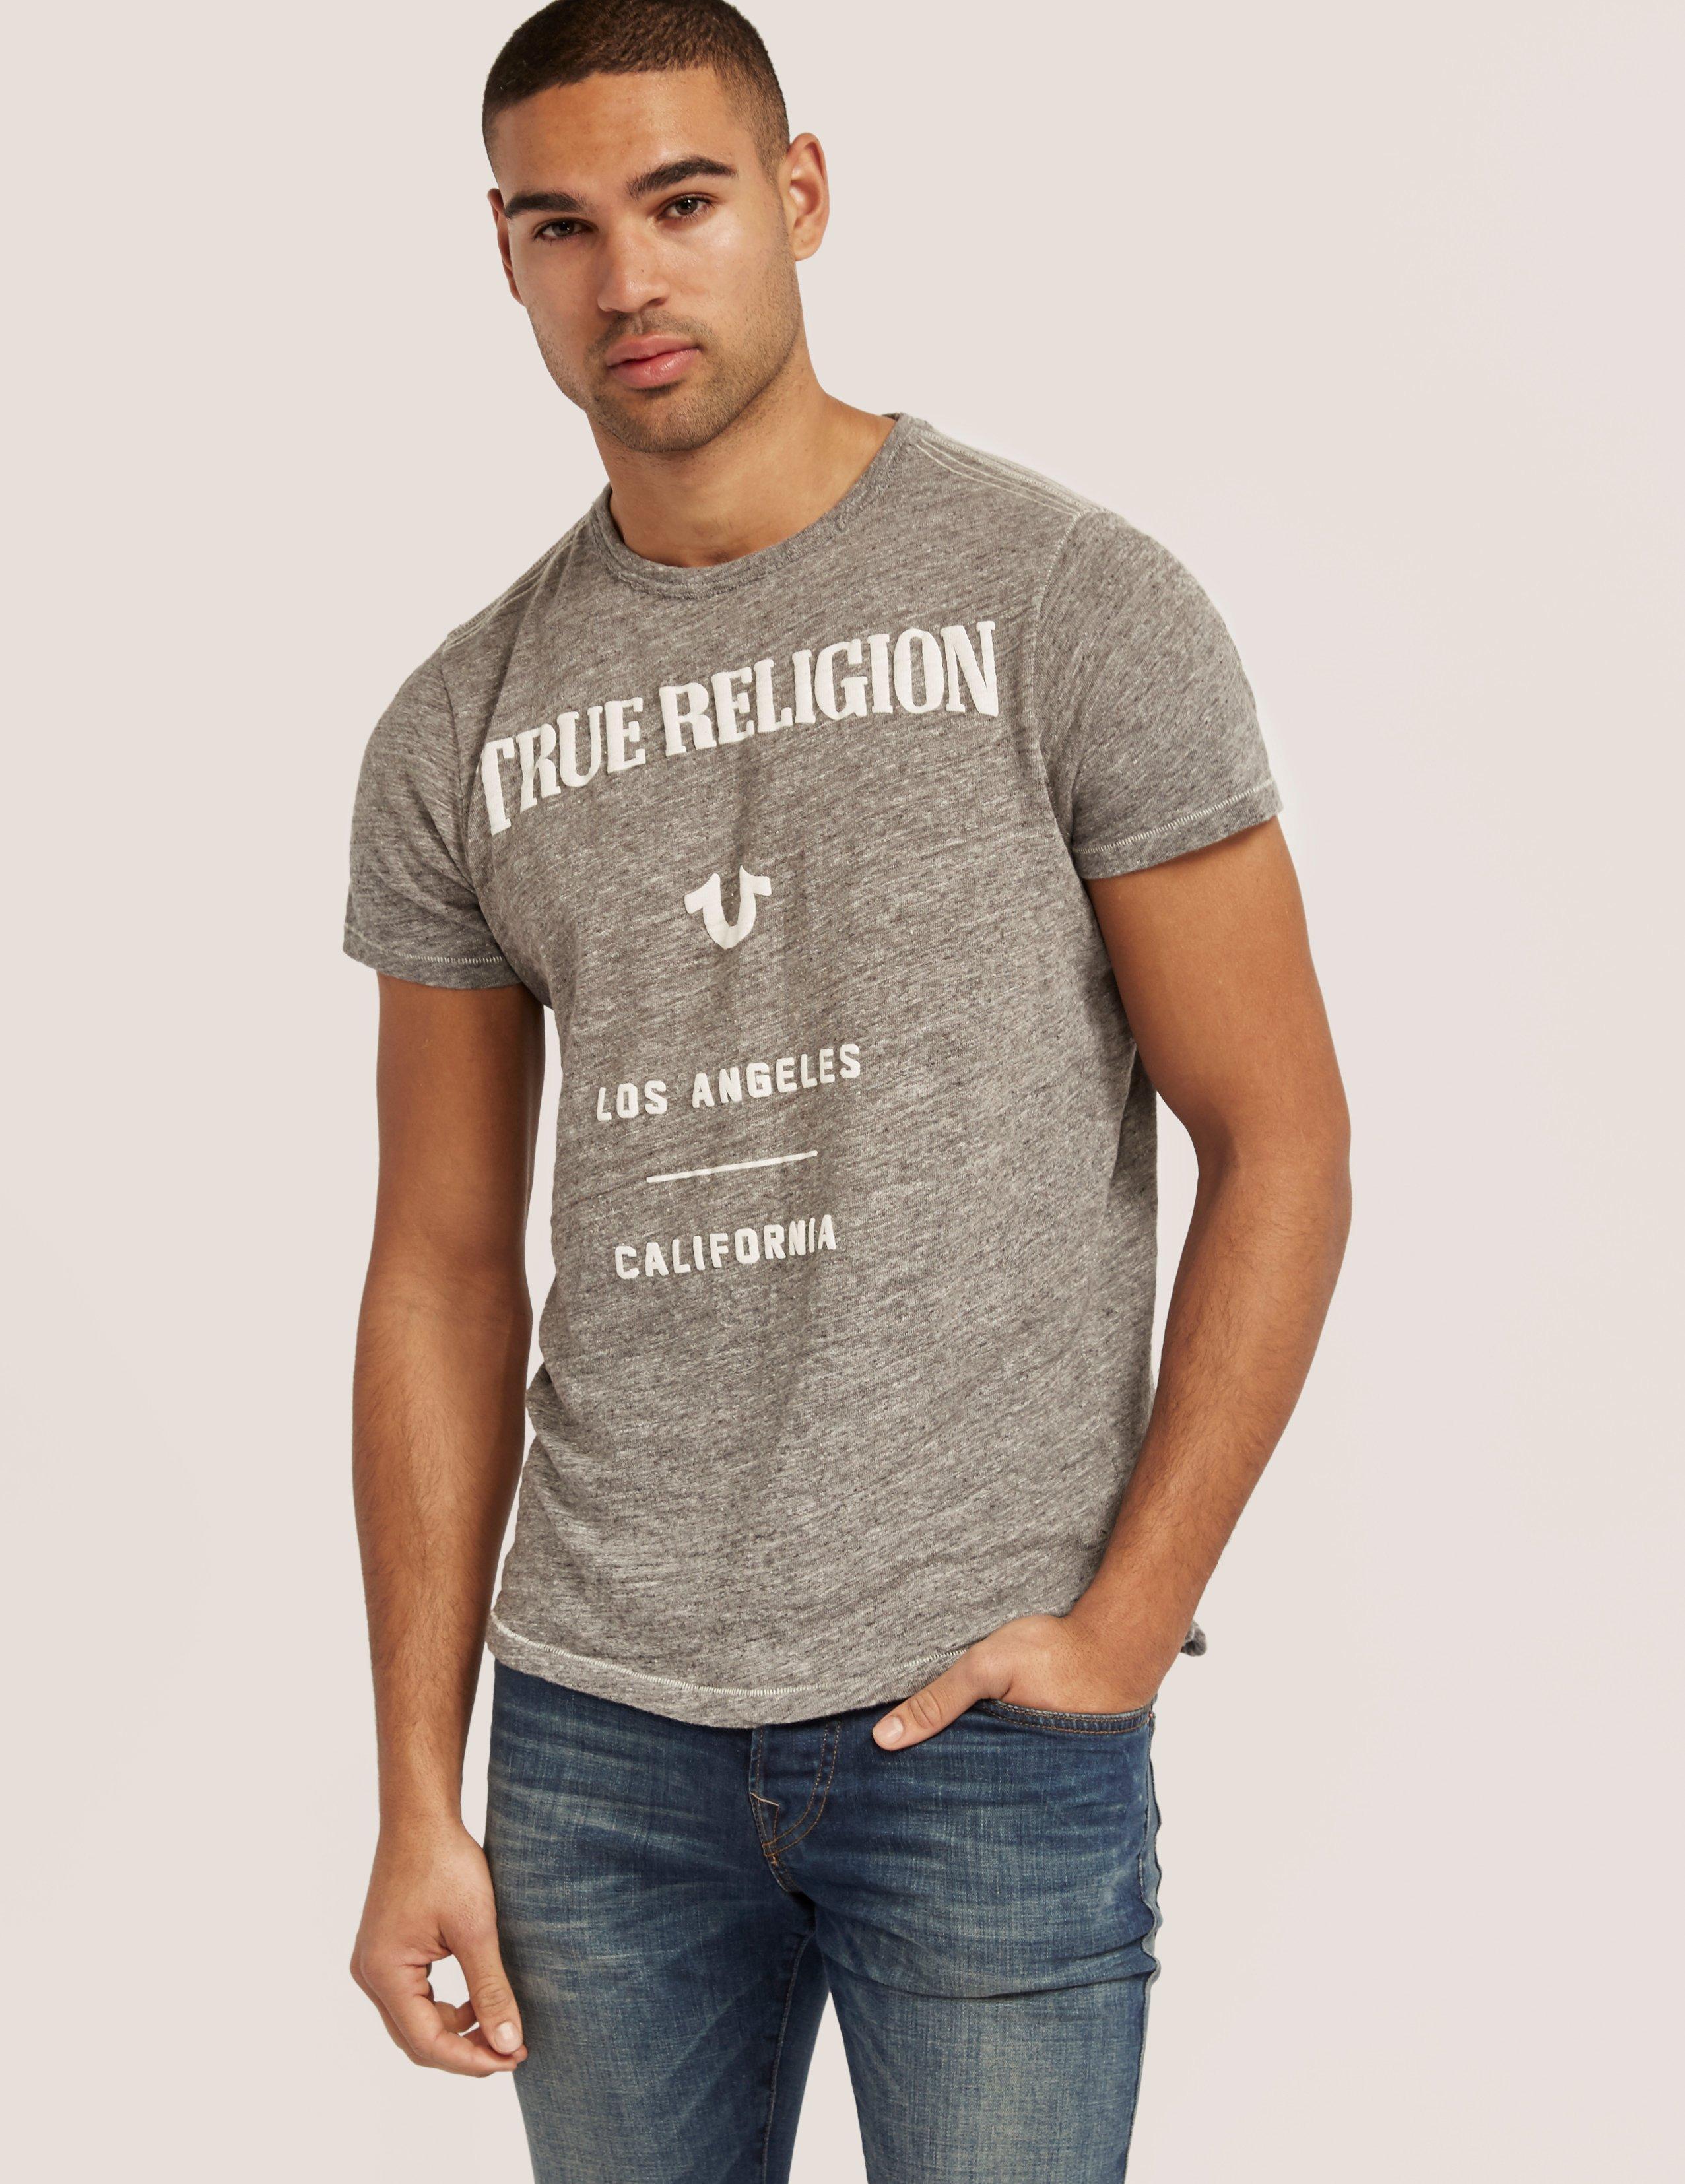 Lyst - True religion Crew Puff Print Short Sleeve T-shirt in Gray for Men